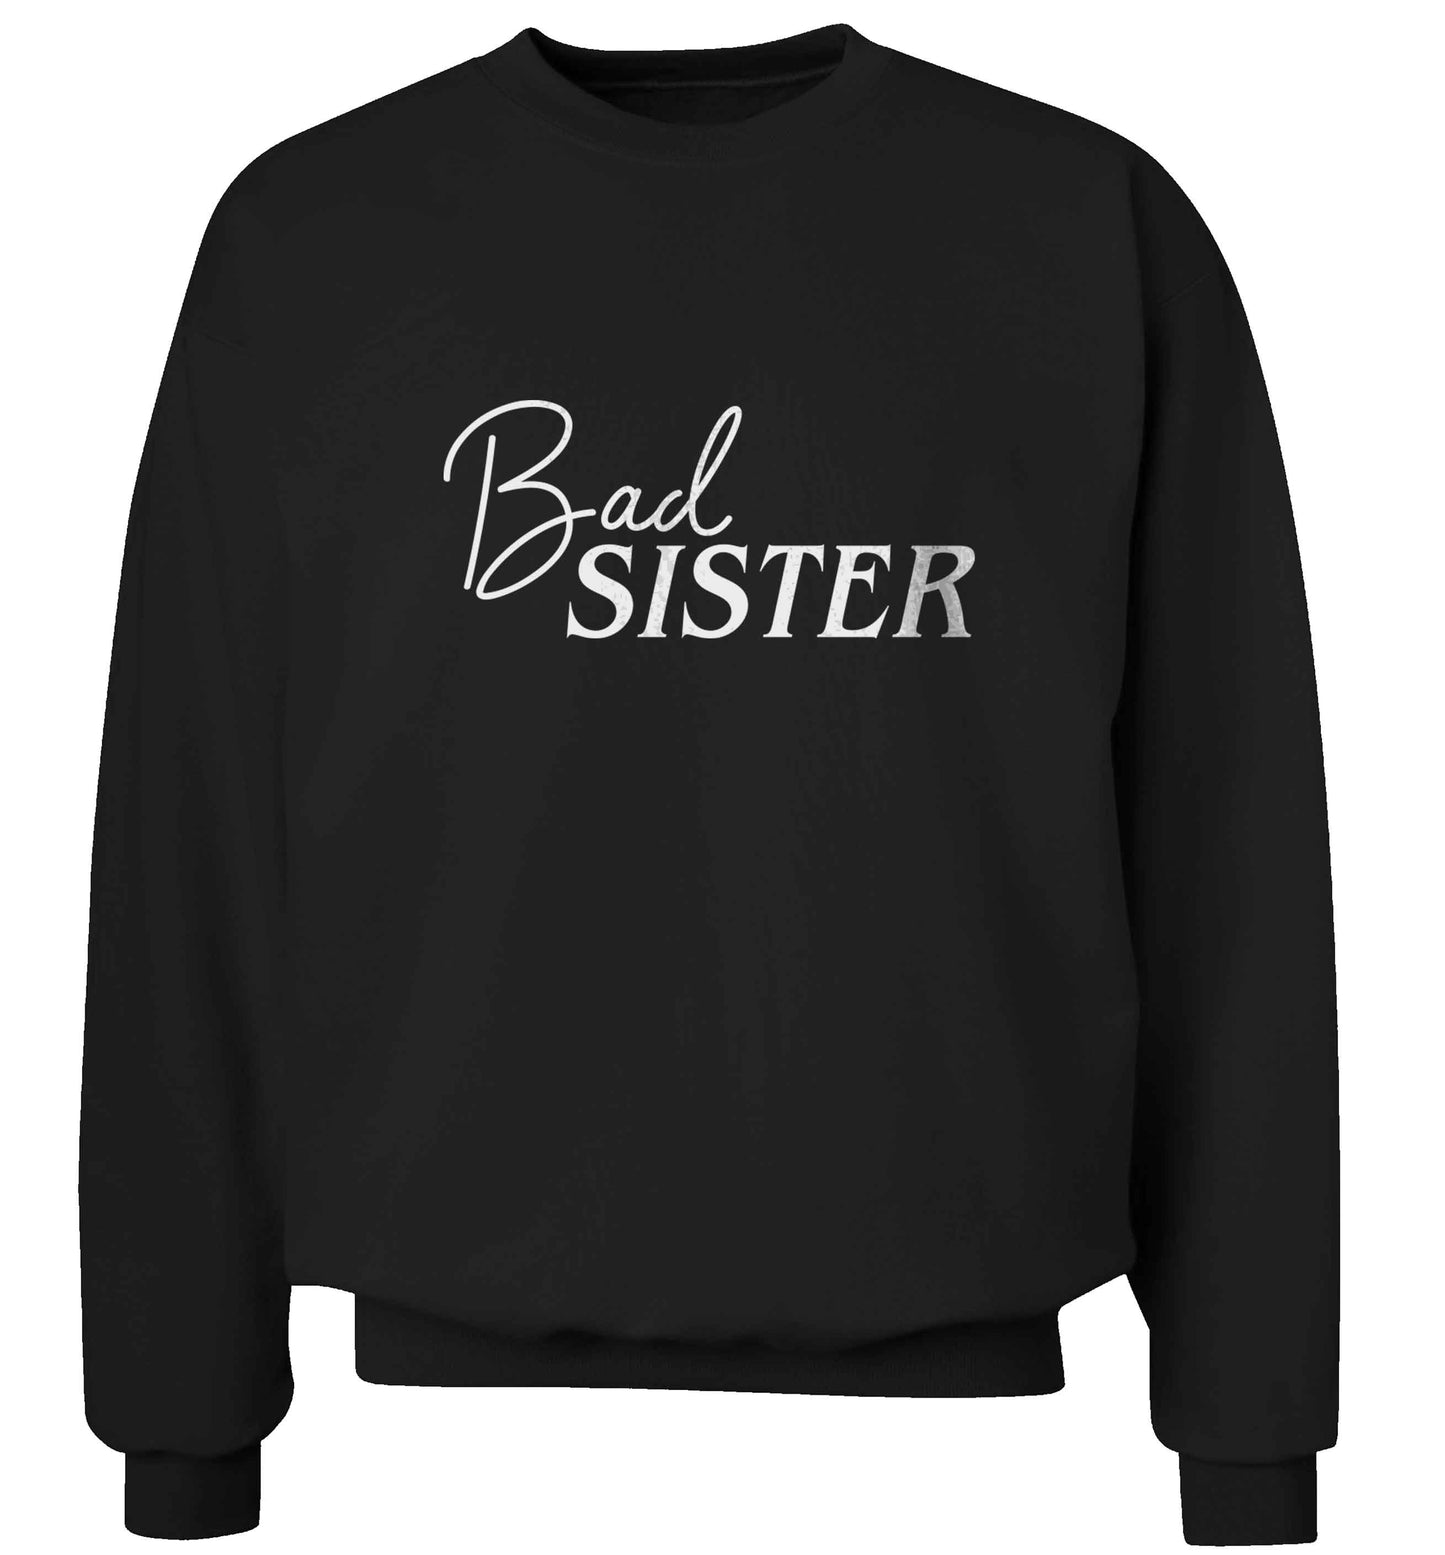 Bad sister adult's unisex black sweater 2XL